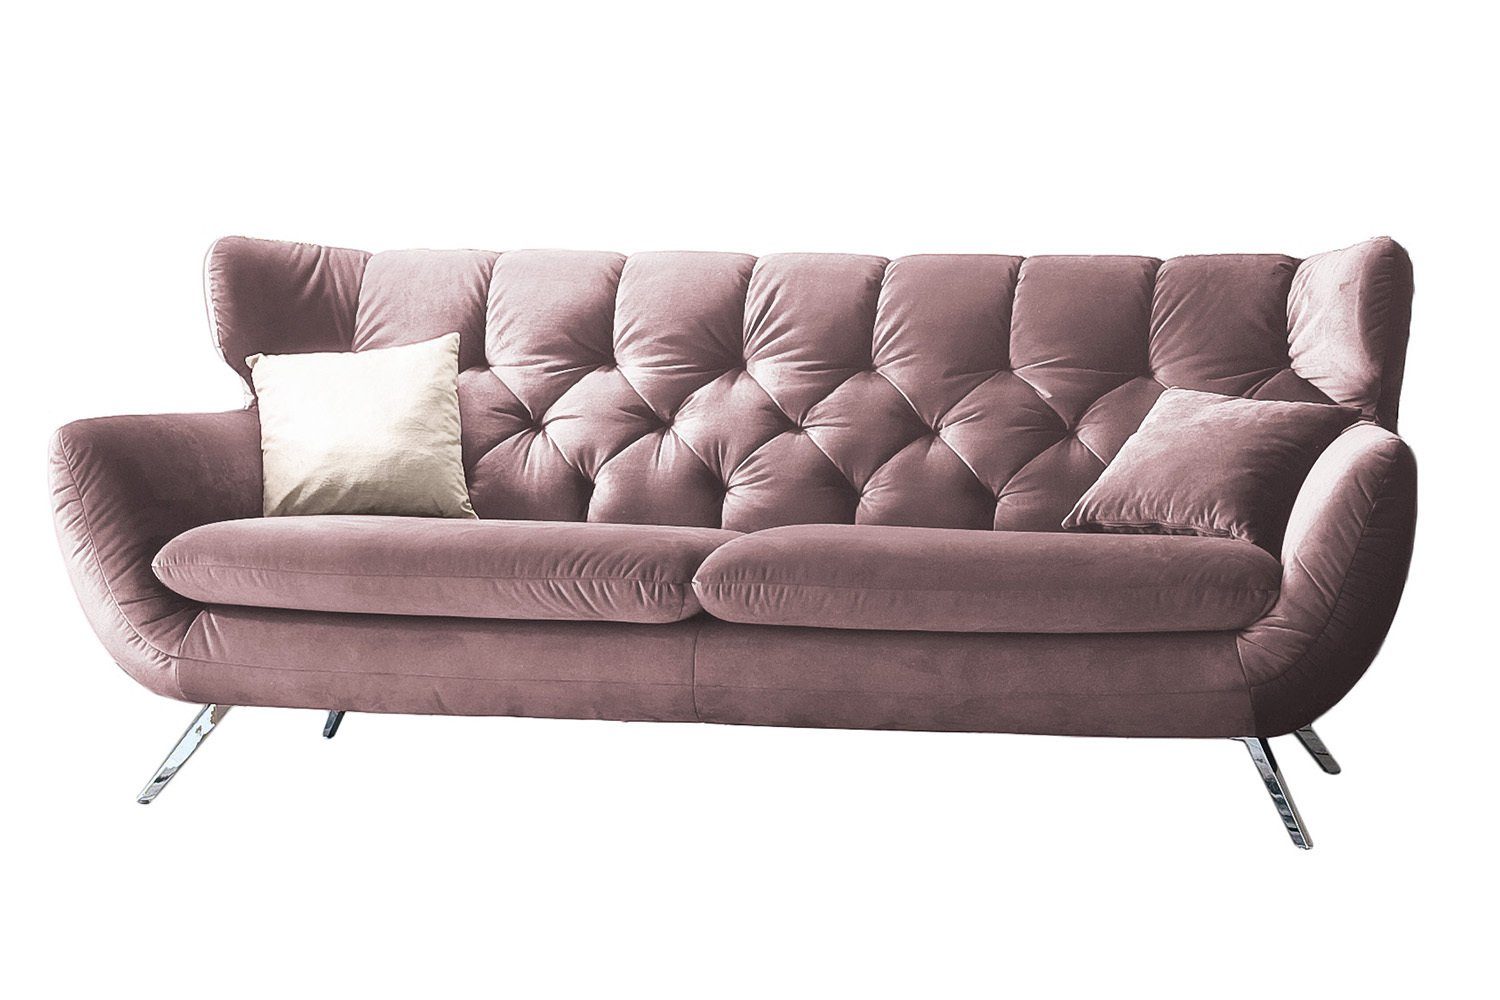 KAWOLA Sofa CHARME, 2-Sitzer Farben od. Velvet Cord, 2,5-Sitzer, versch. od